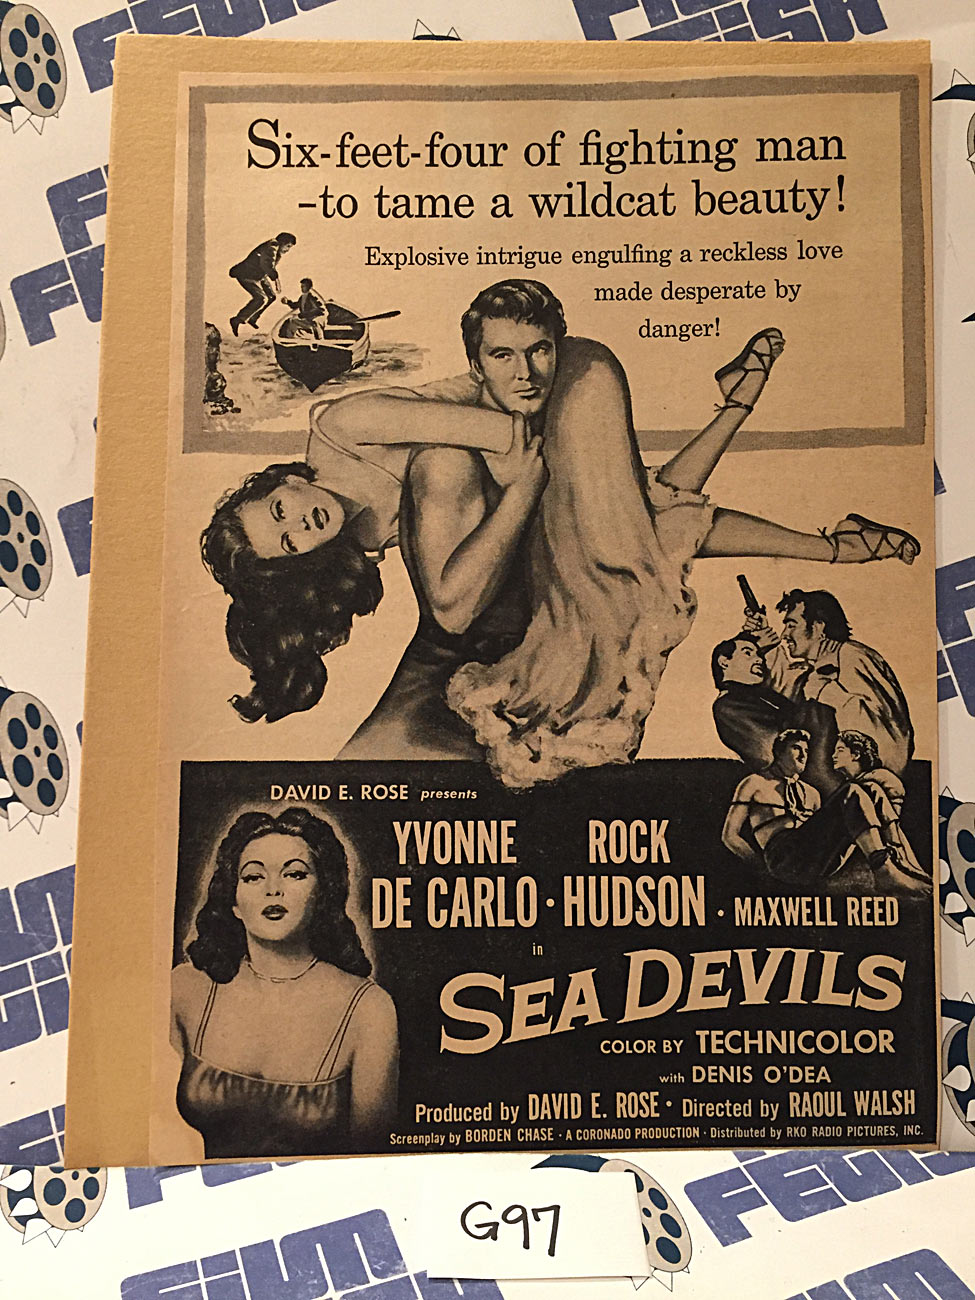 Sea Devils (1953) Movie Original Full-Page Magazine Advertisement, Yvonne De Carlo, Rock Hudson [G97]